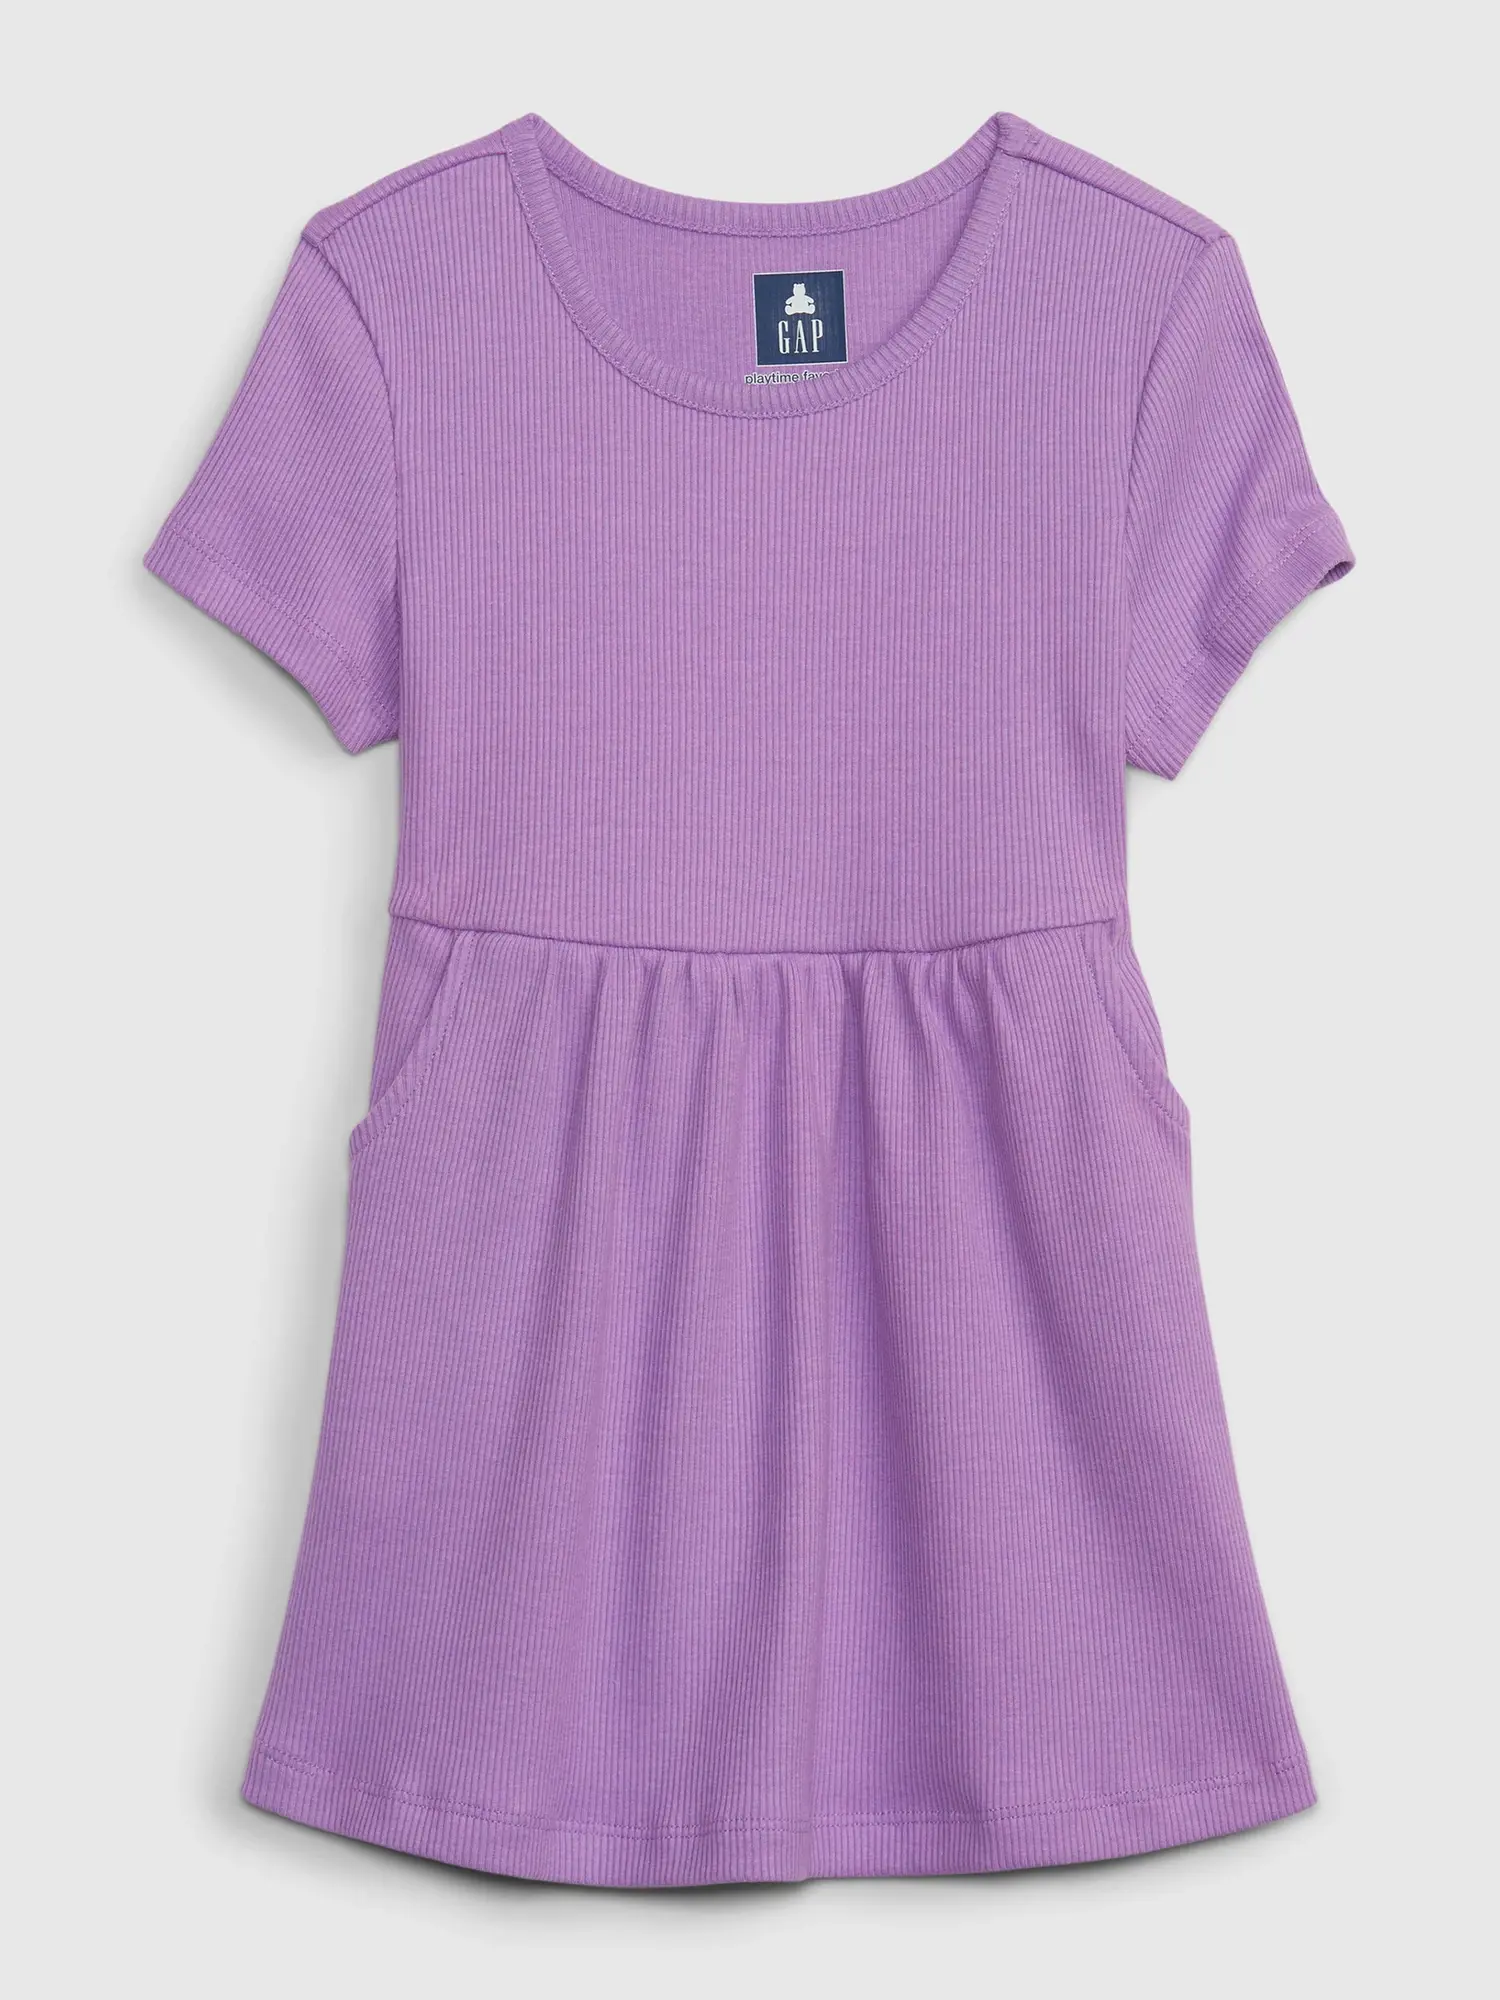 Gap Toddler Organic Cotton Mix and Match Skater Dress purple. 1